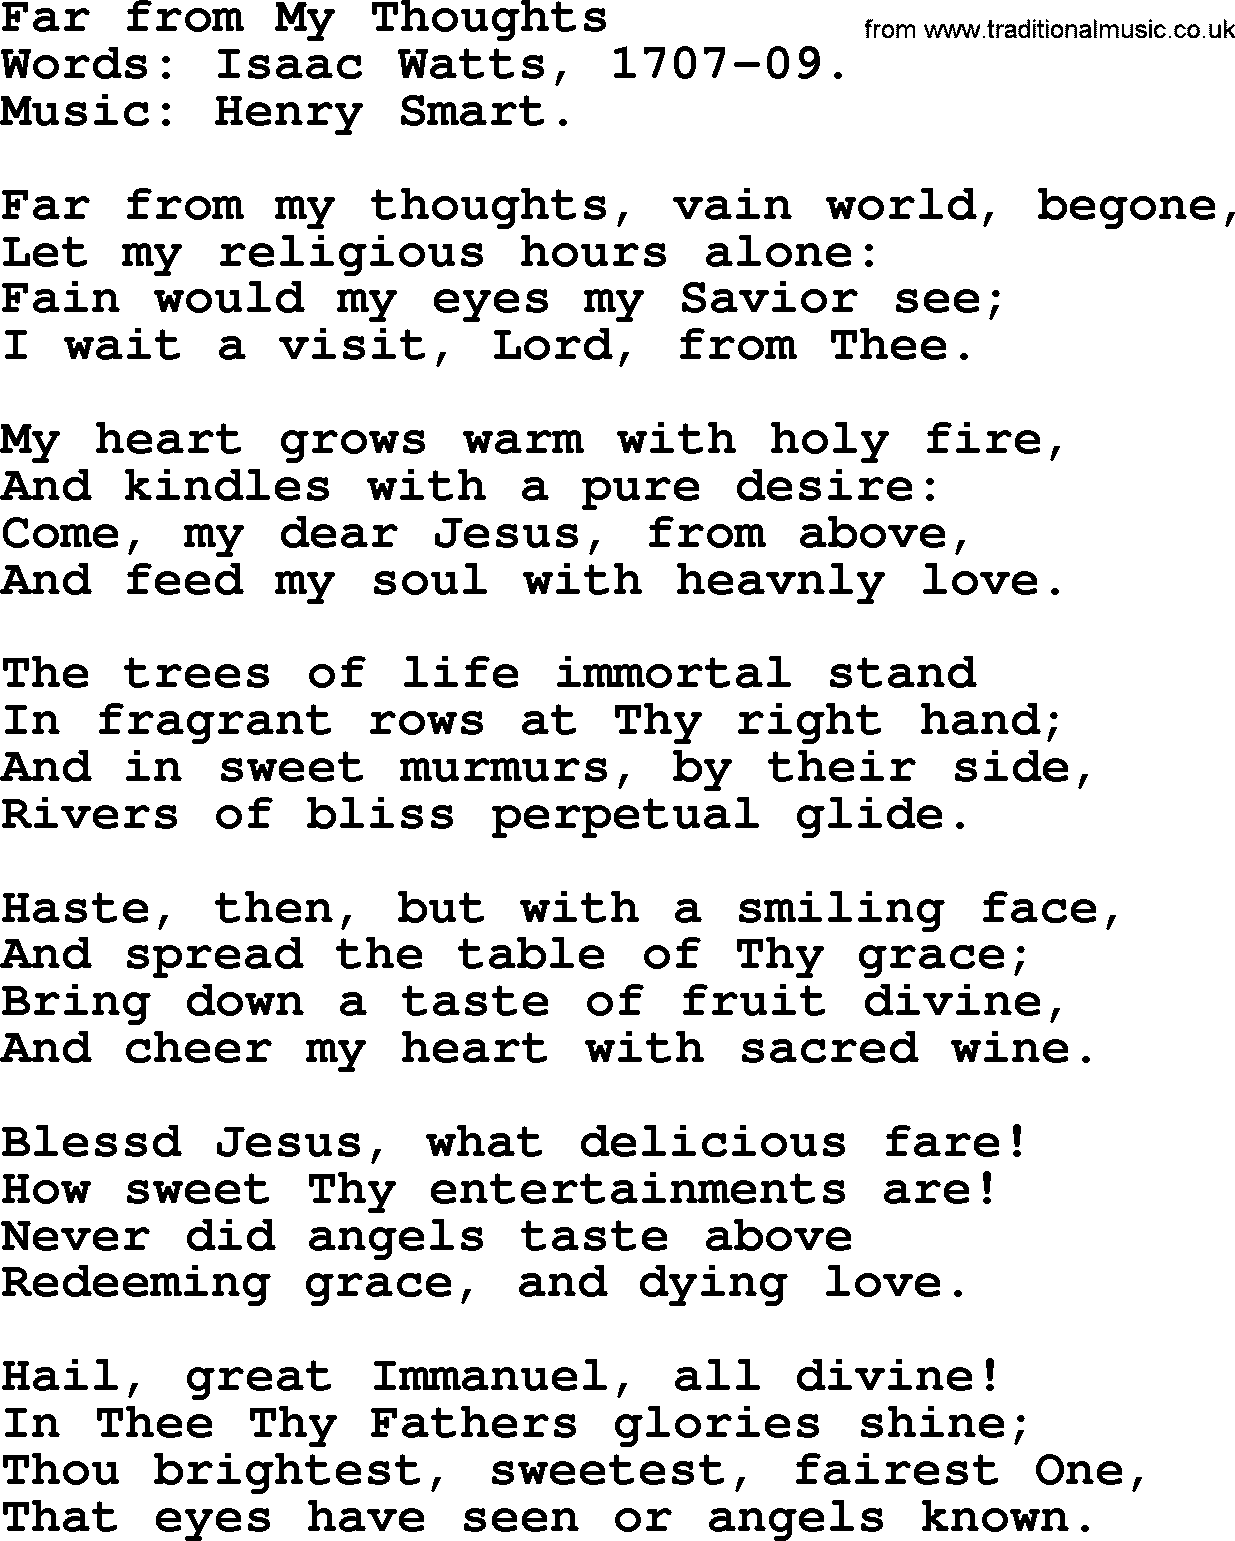 Isaac Watts Christian hymn: Far from My Thoughts- lyricss